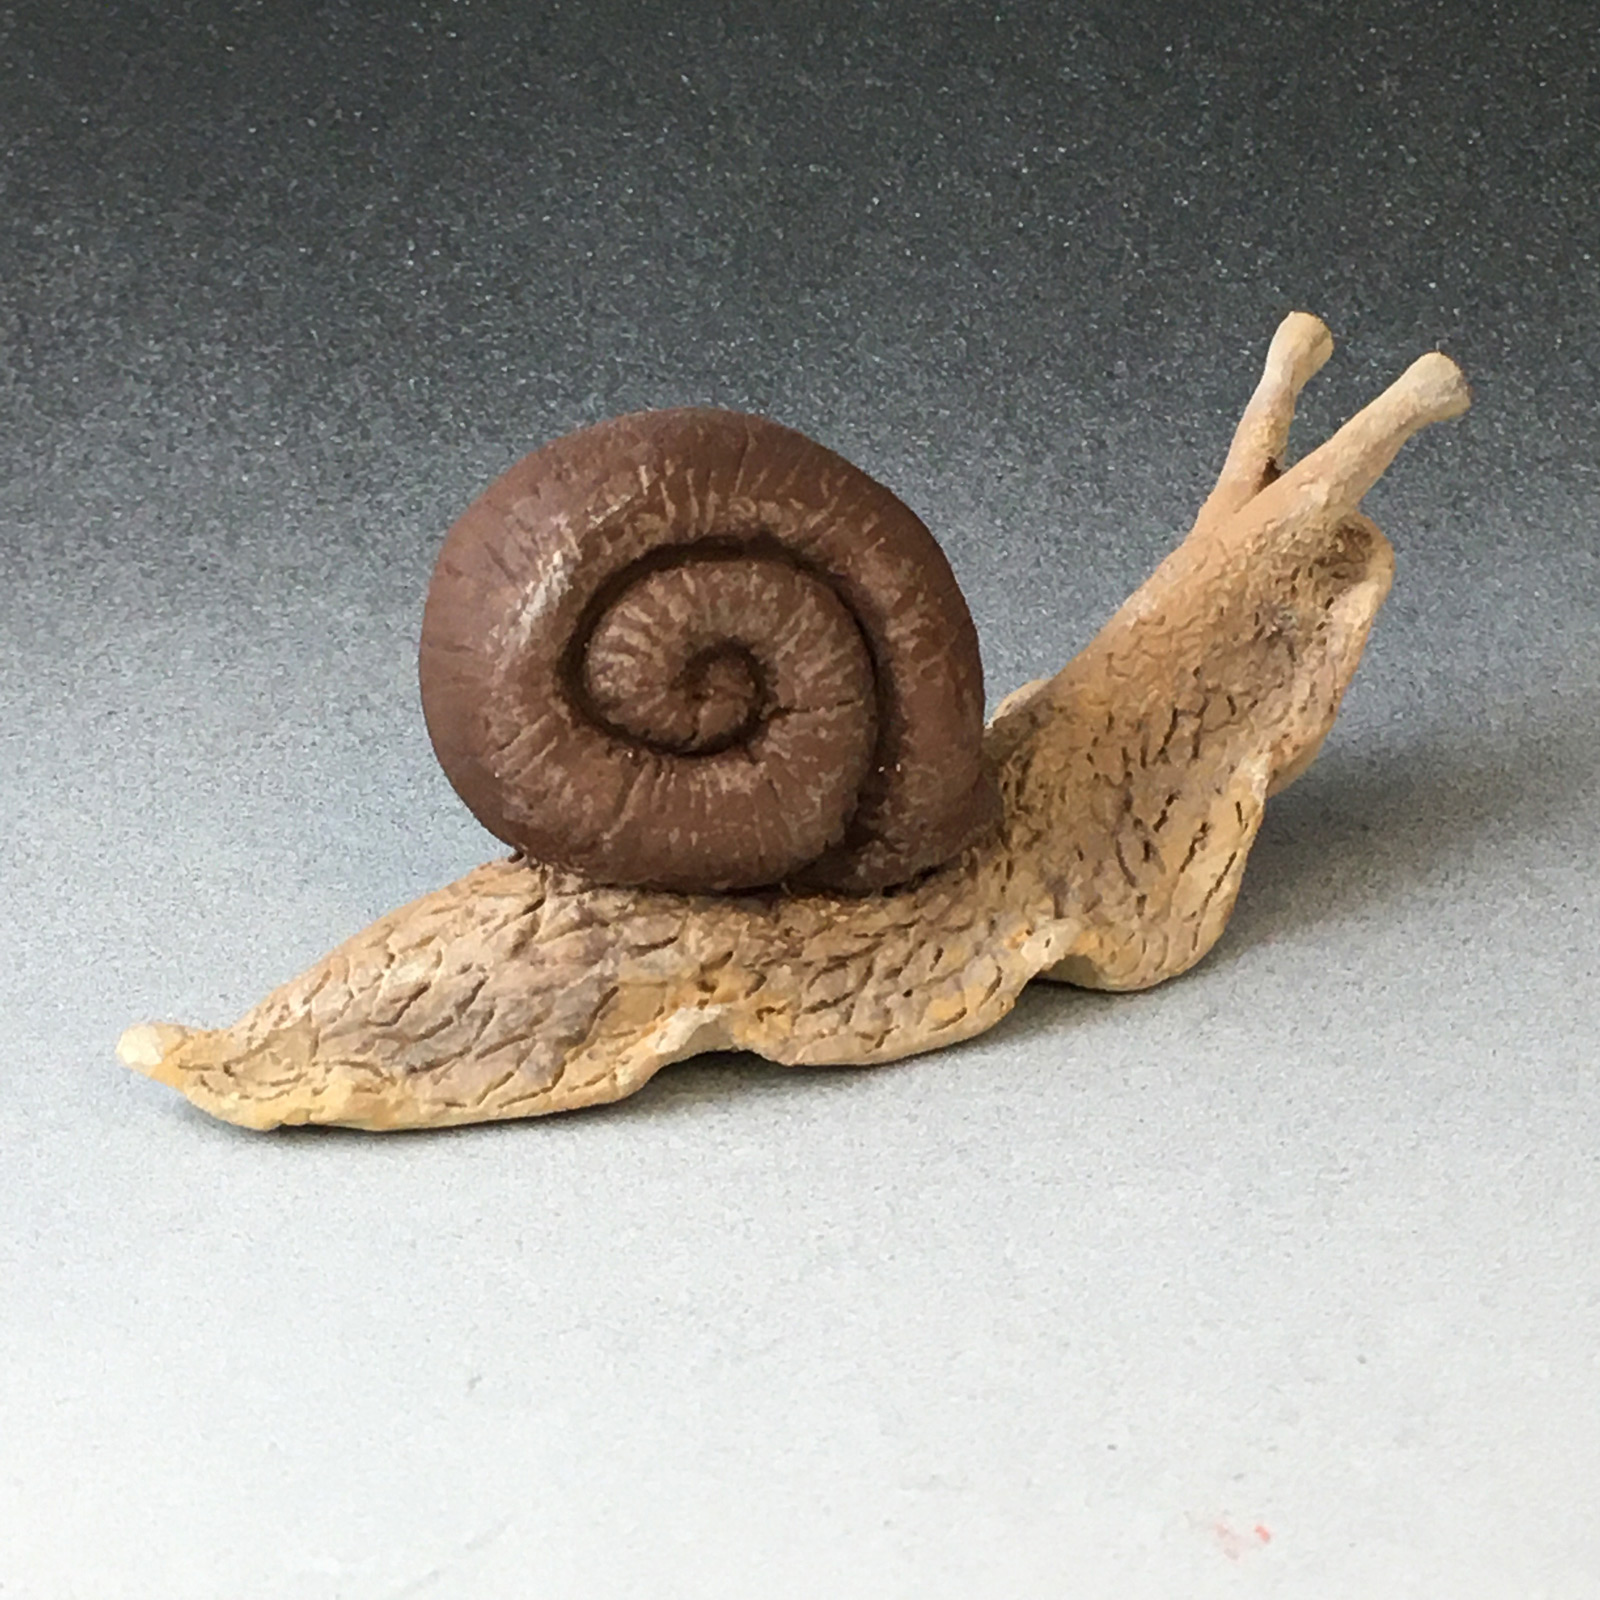 Ceramic snail by SVC art student